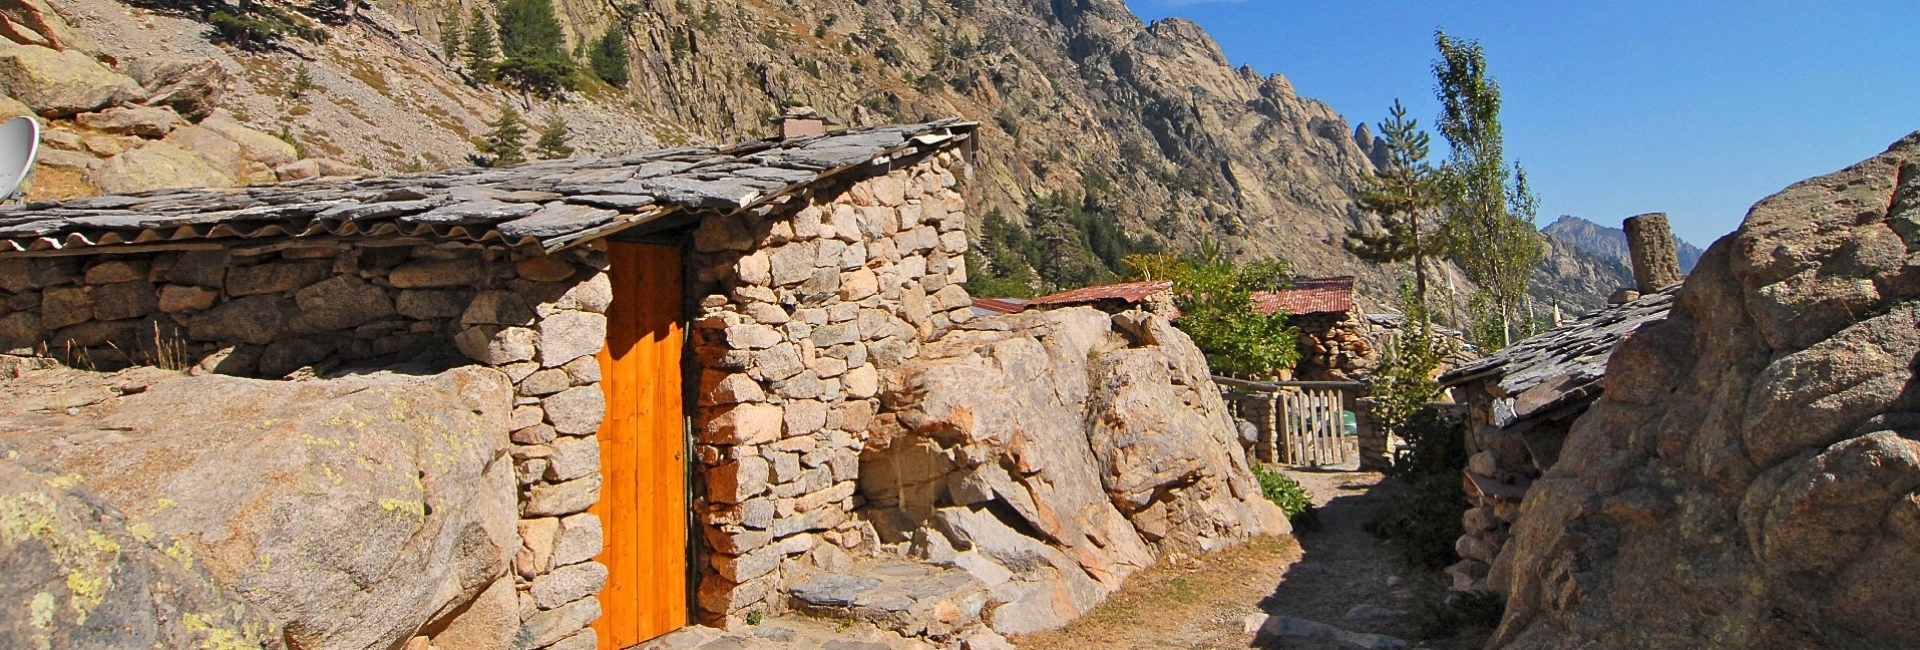 shepherd's hut